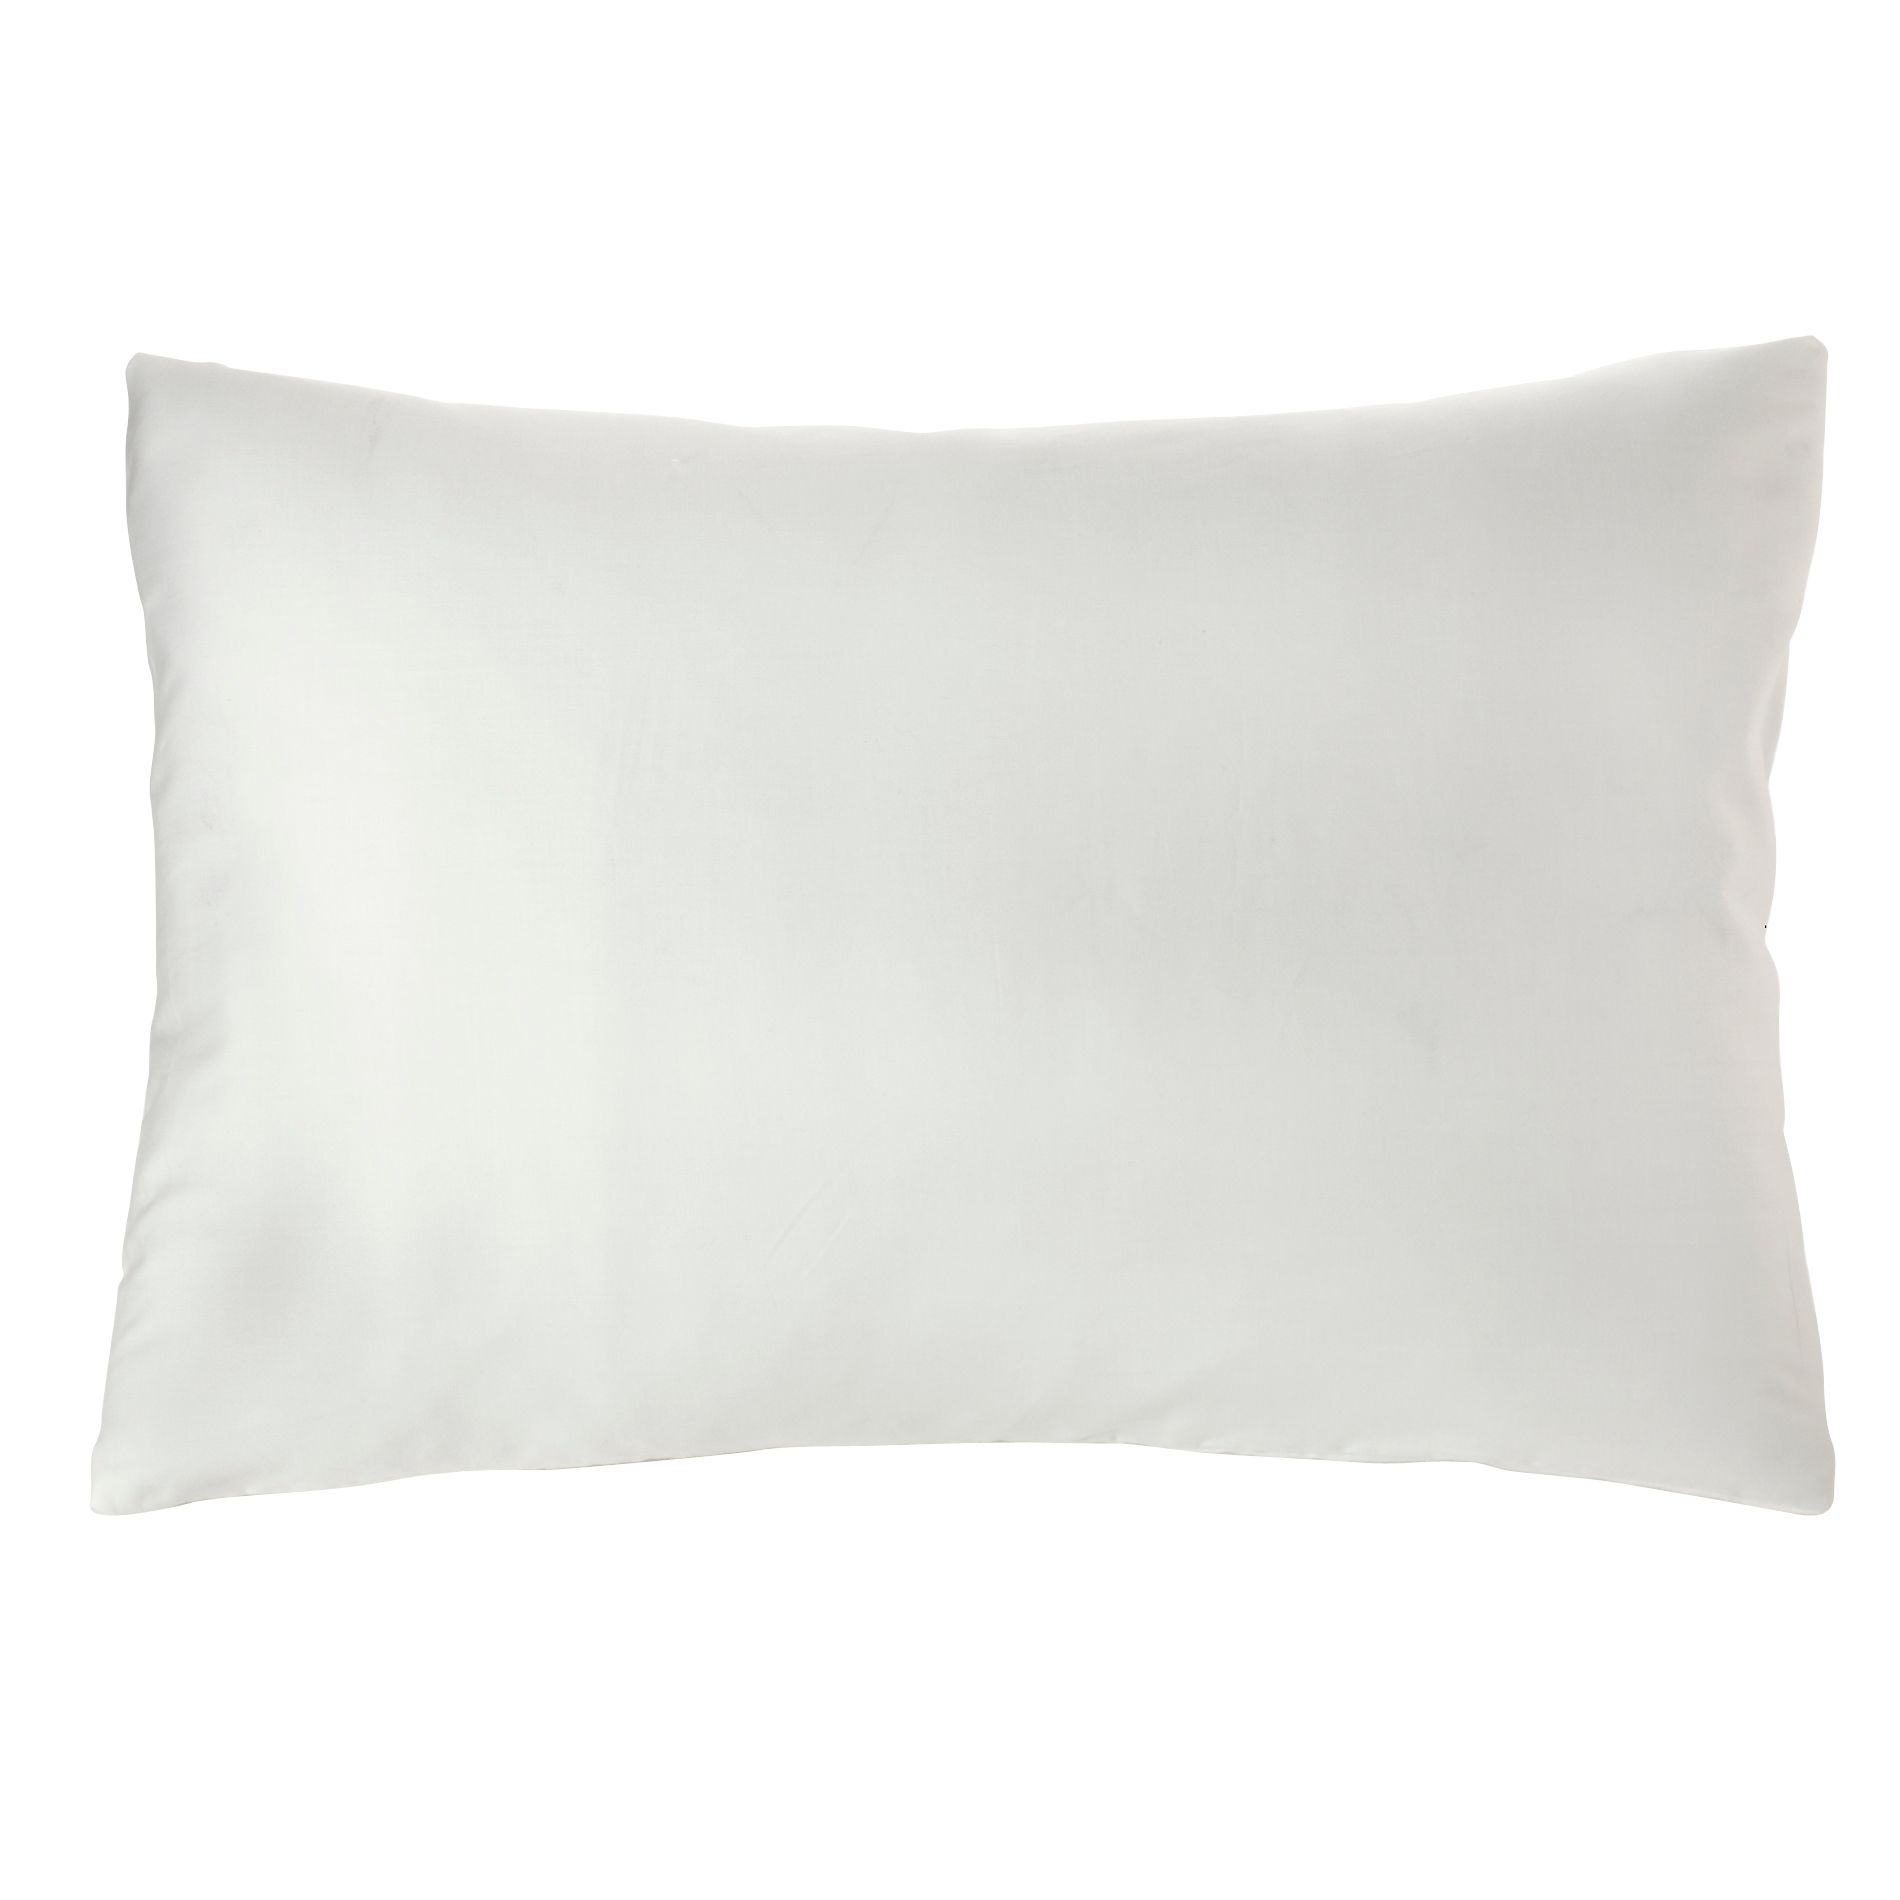 Premium Stain Release & Repel Pillow Cover